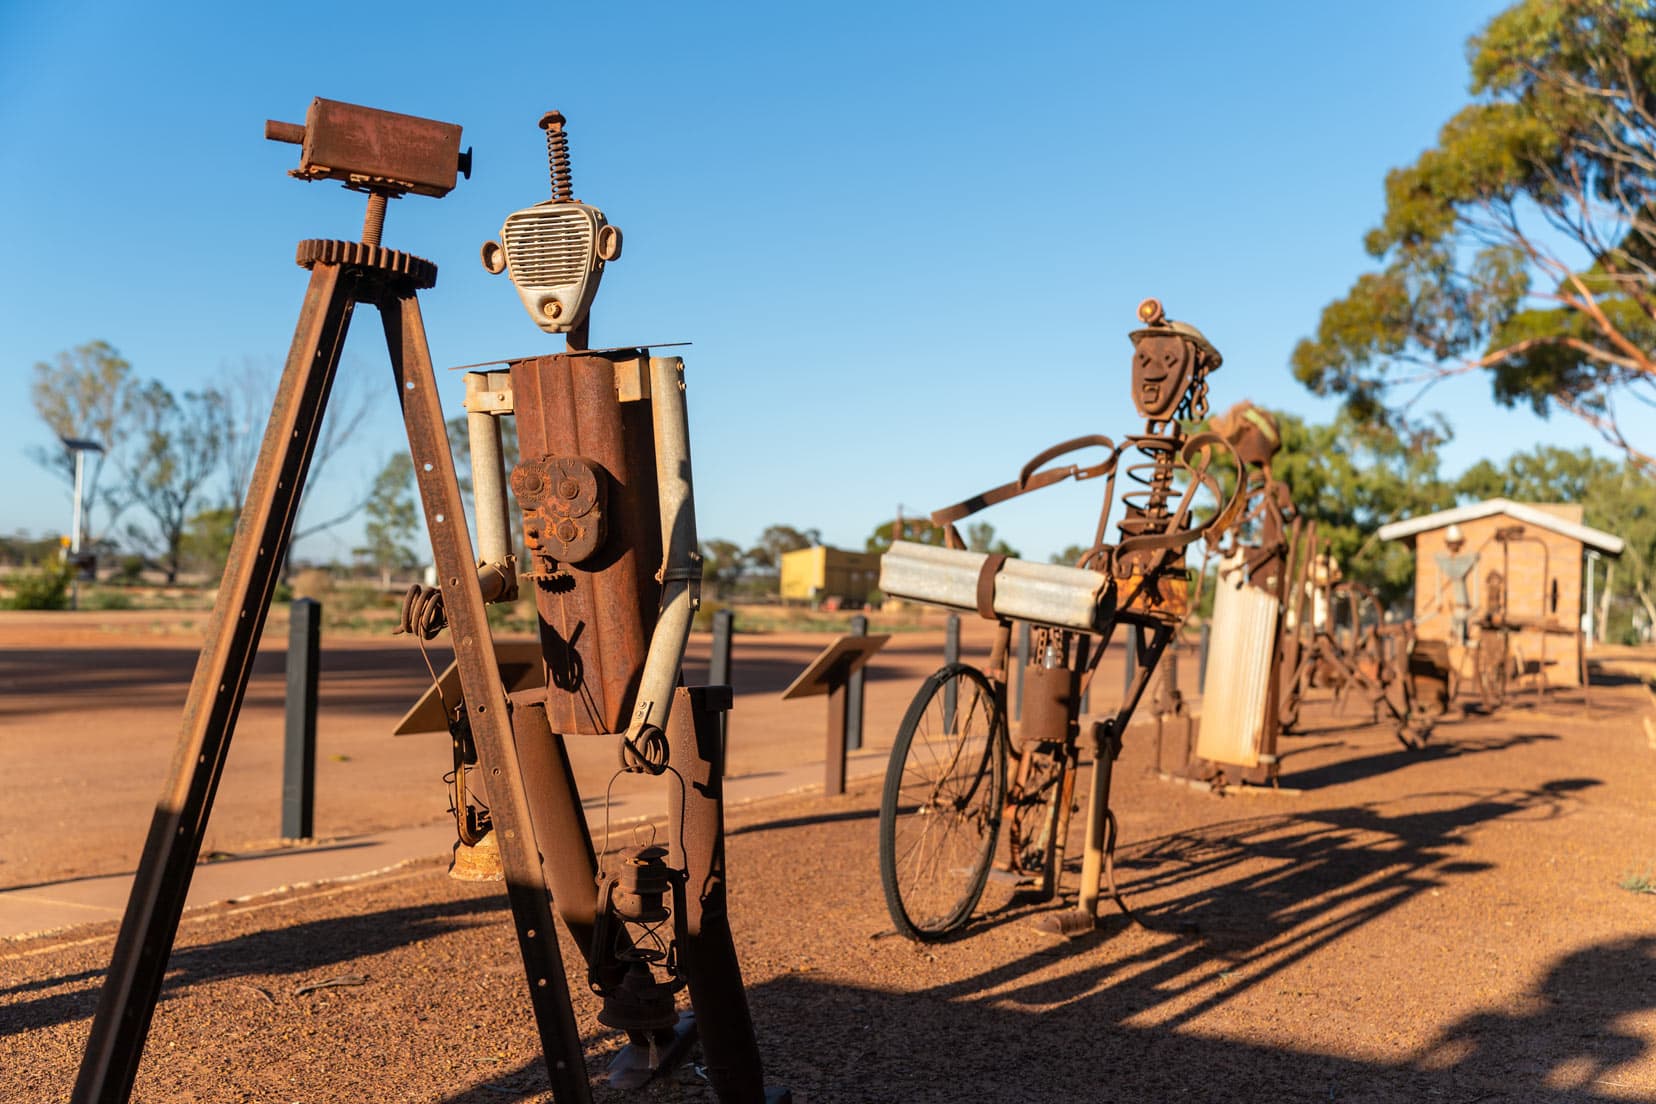 Hyden-figures made out of scrap metal art-on-main-street